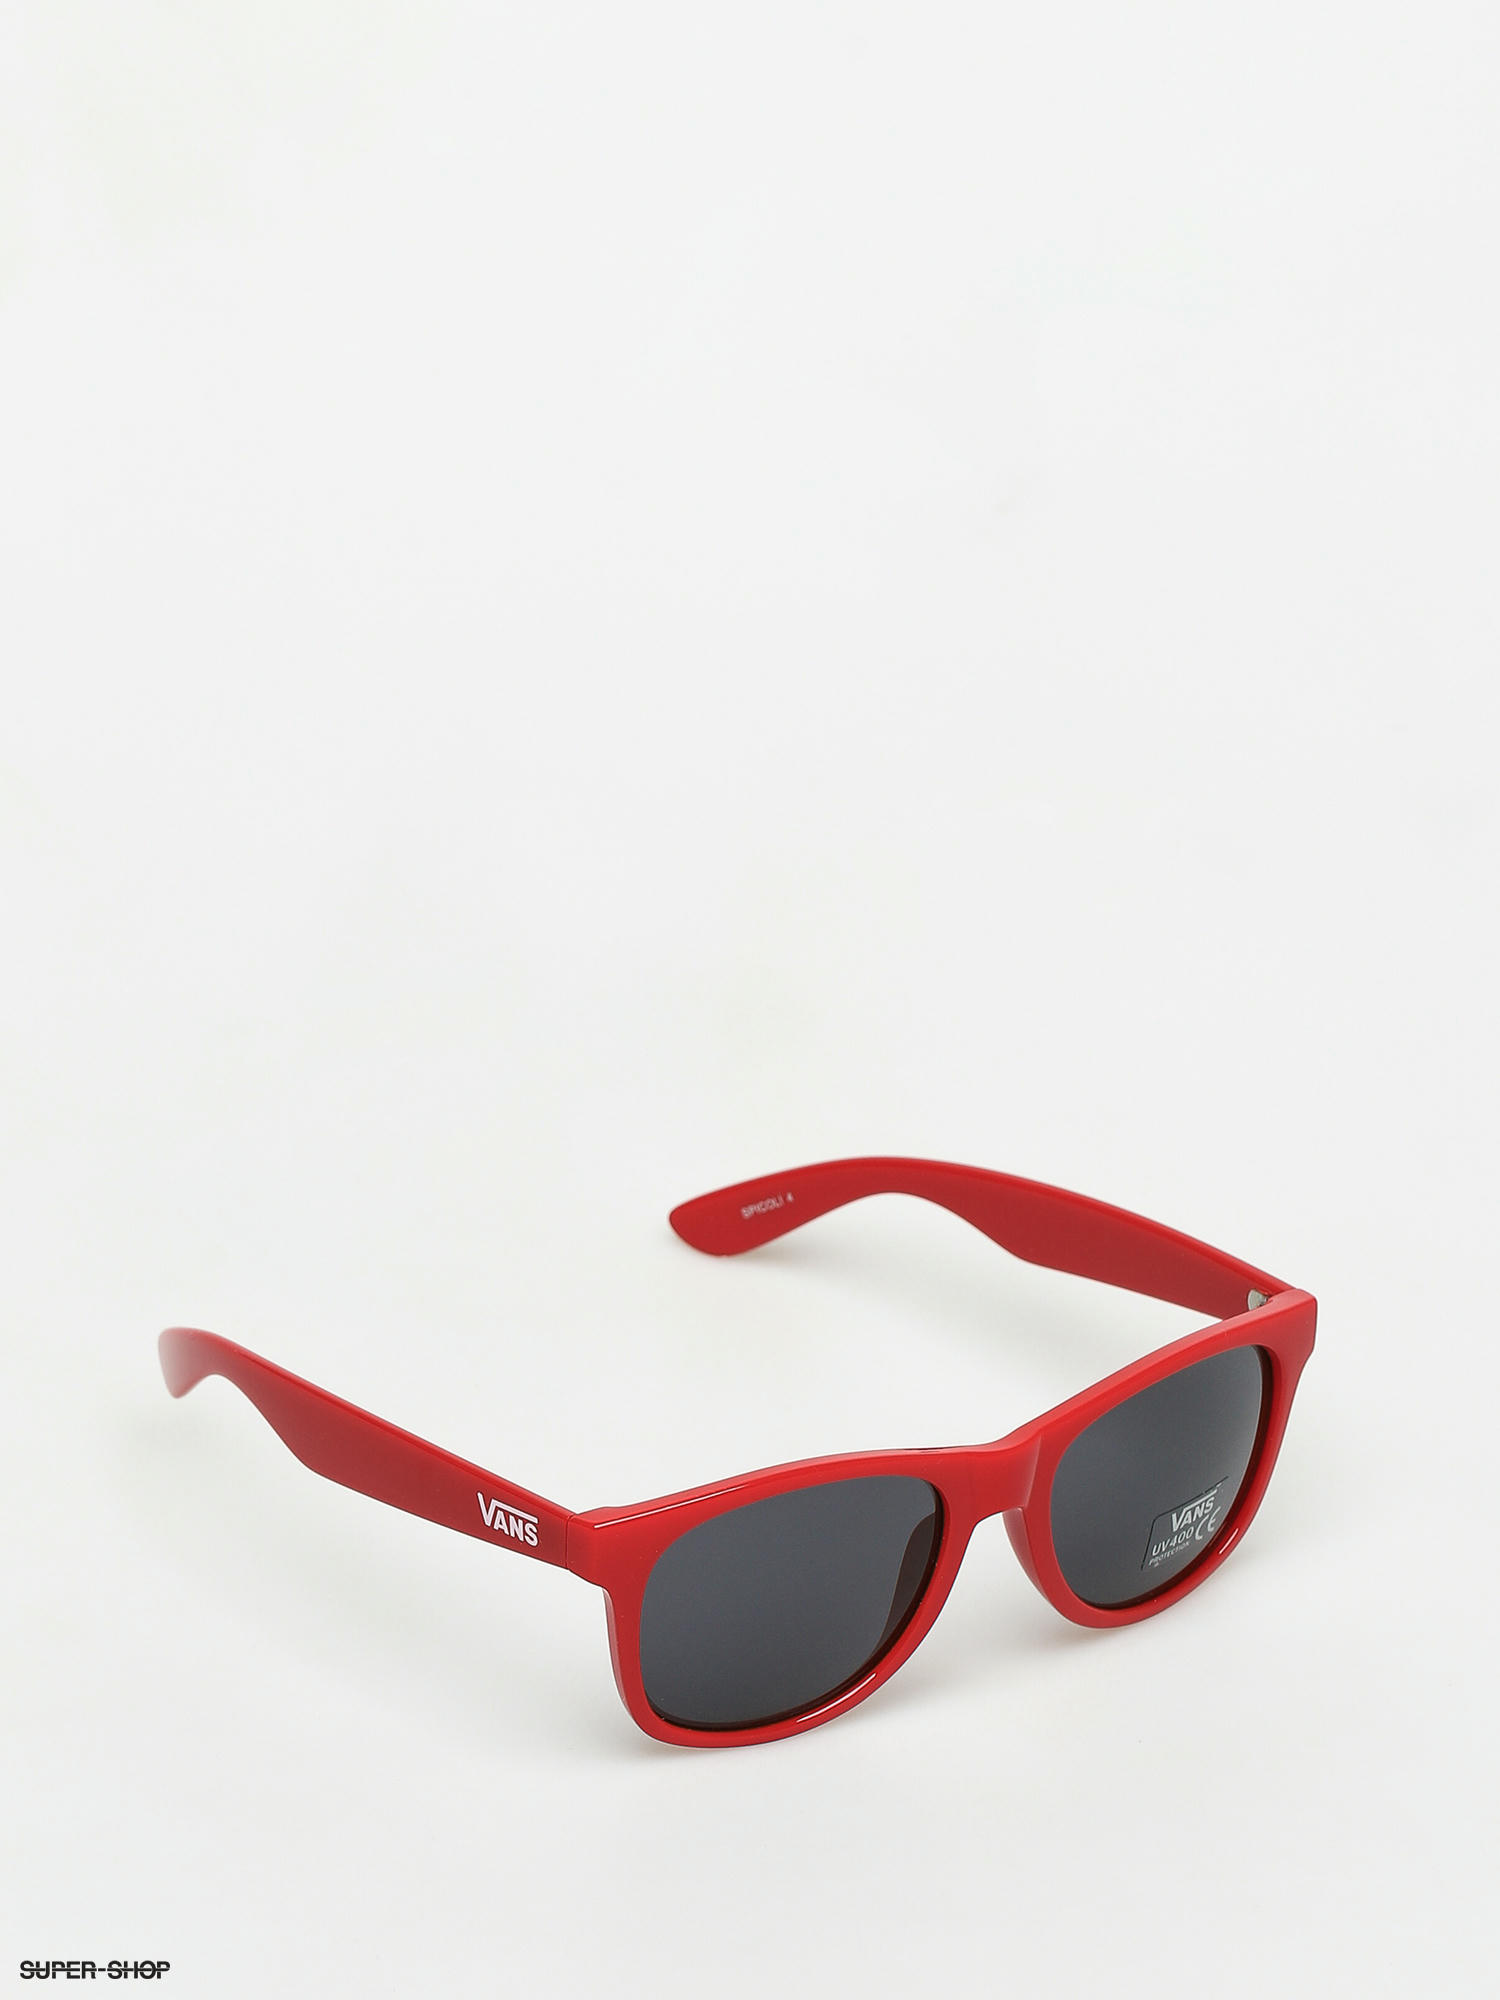 racing red sunglasses